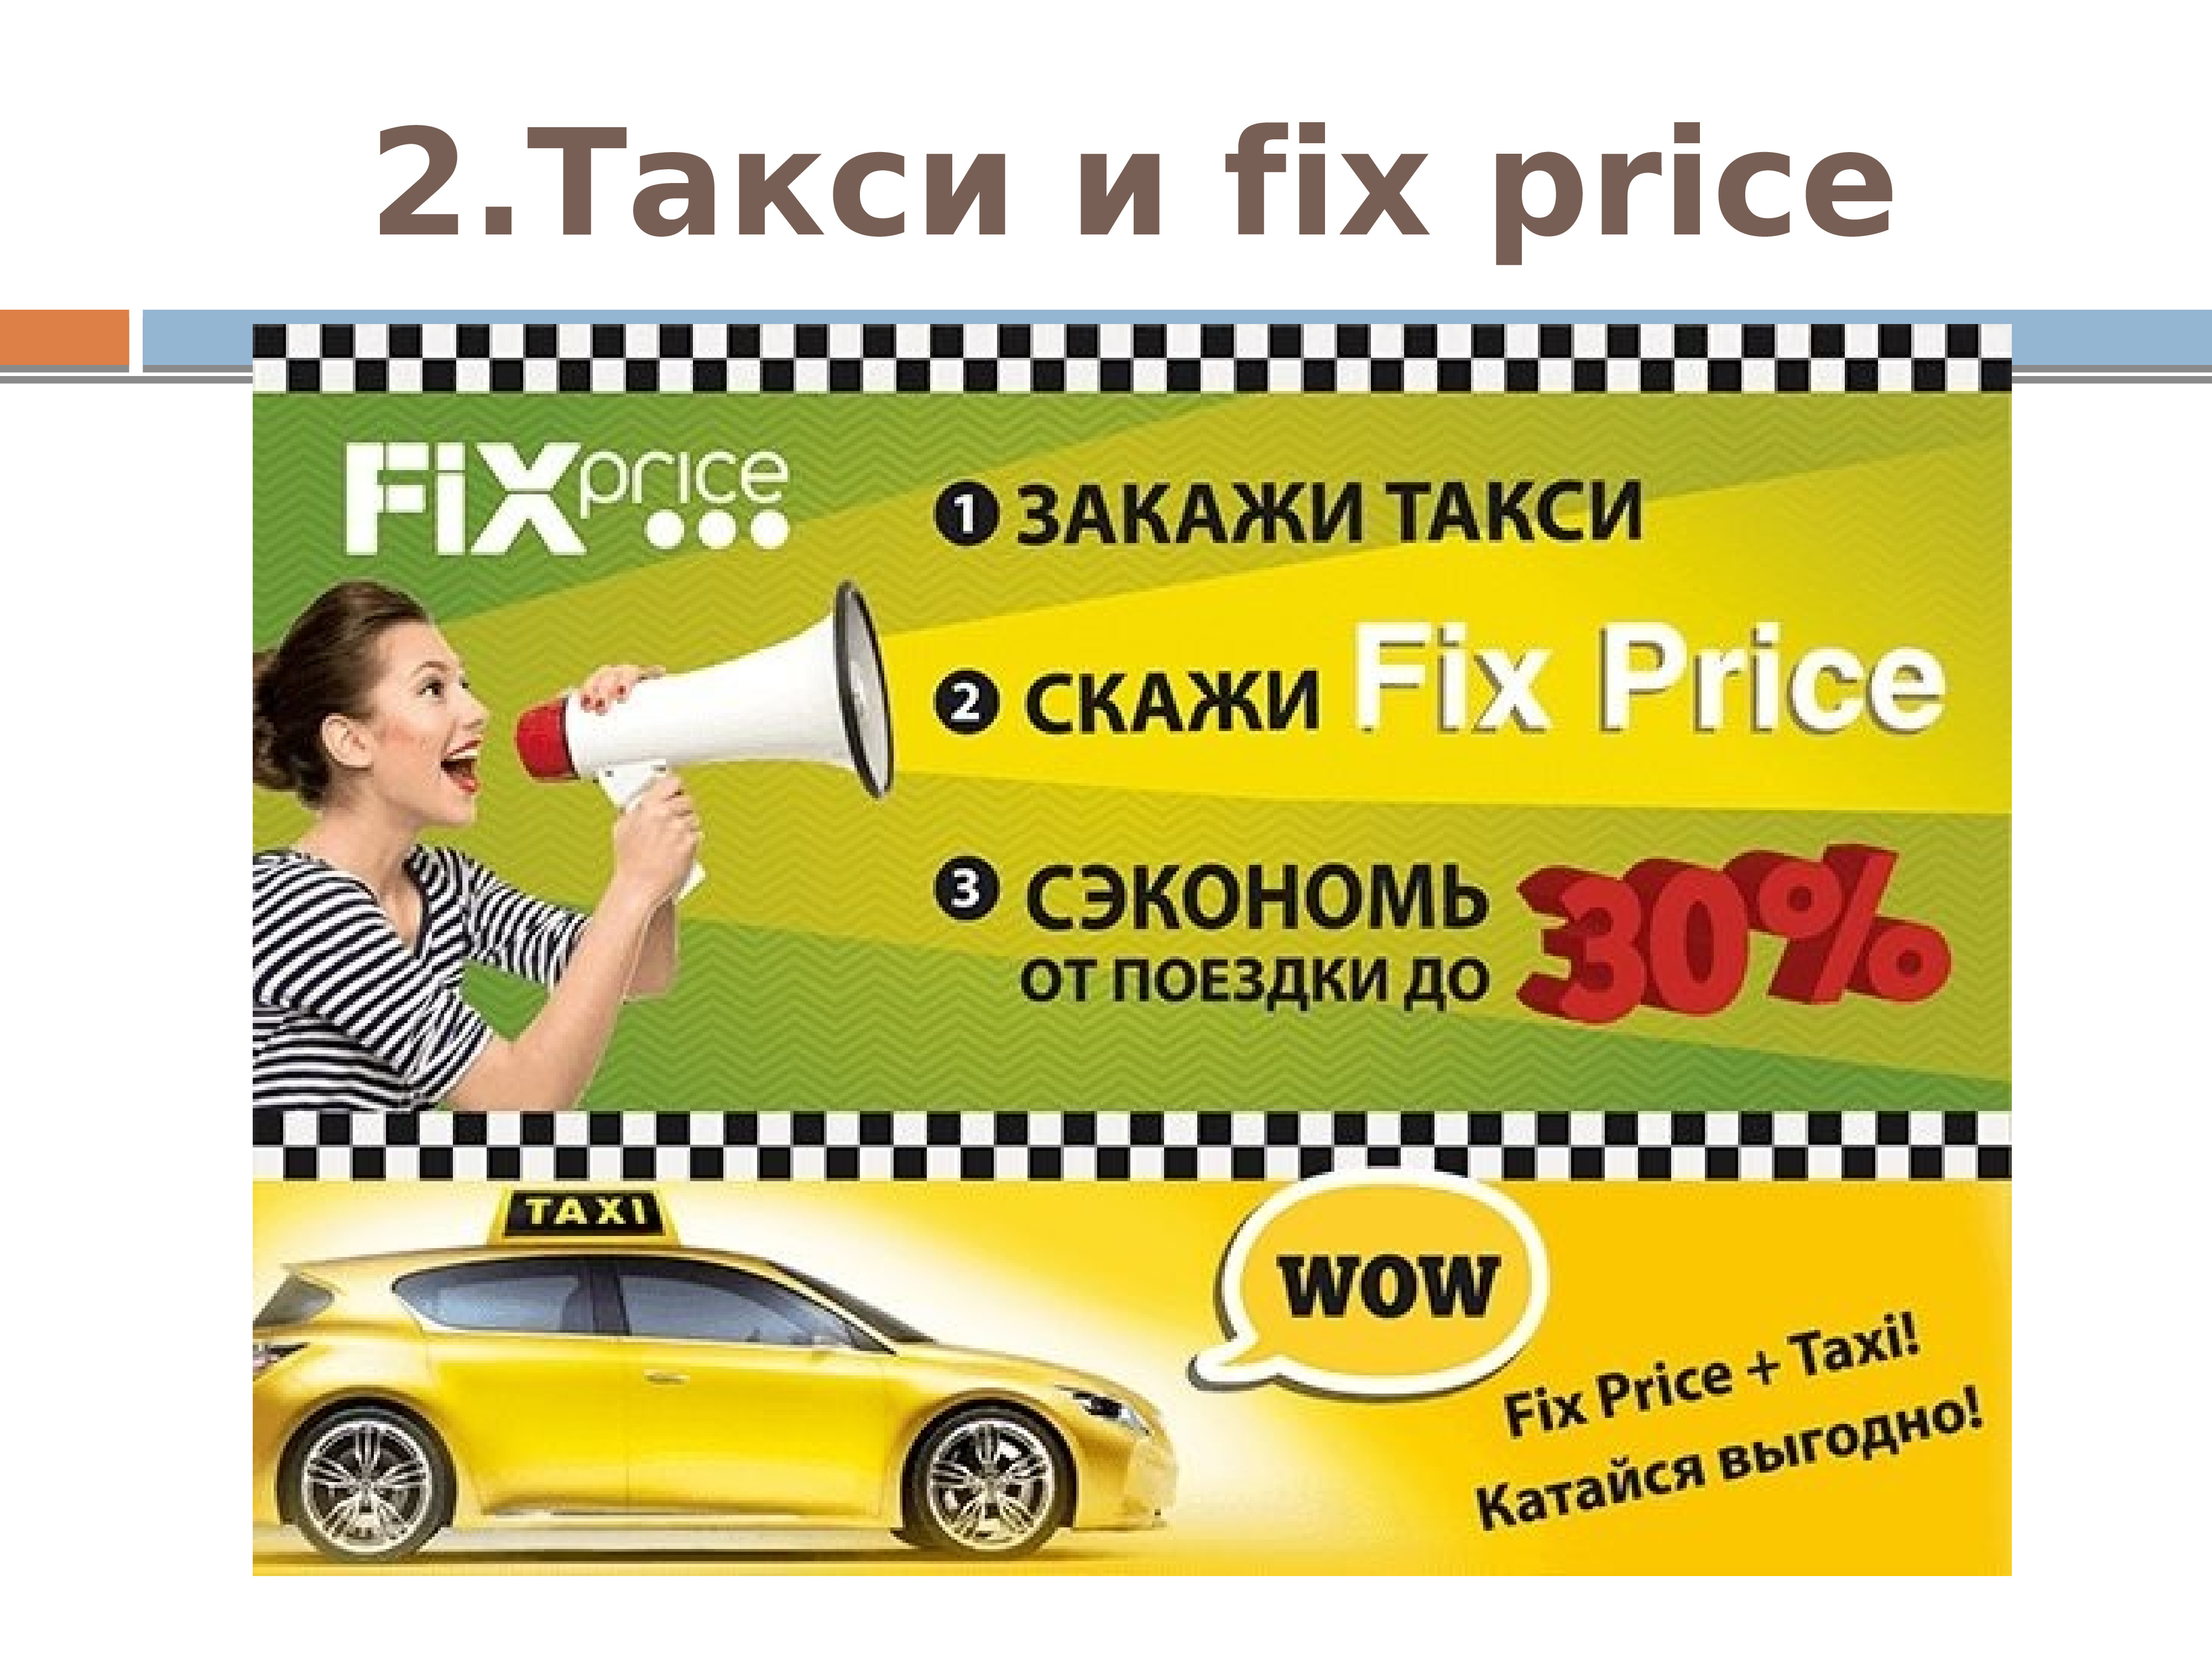 Закажи таксист. Реклама такси. Закажи такси. Акции для таксистов. Баннер такси.